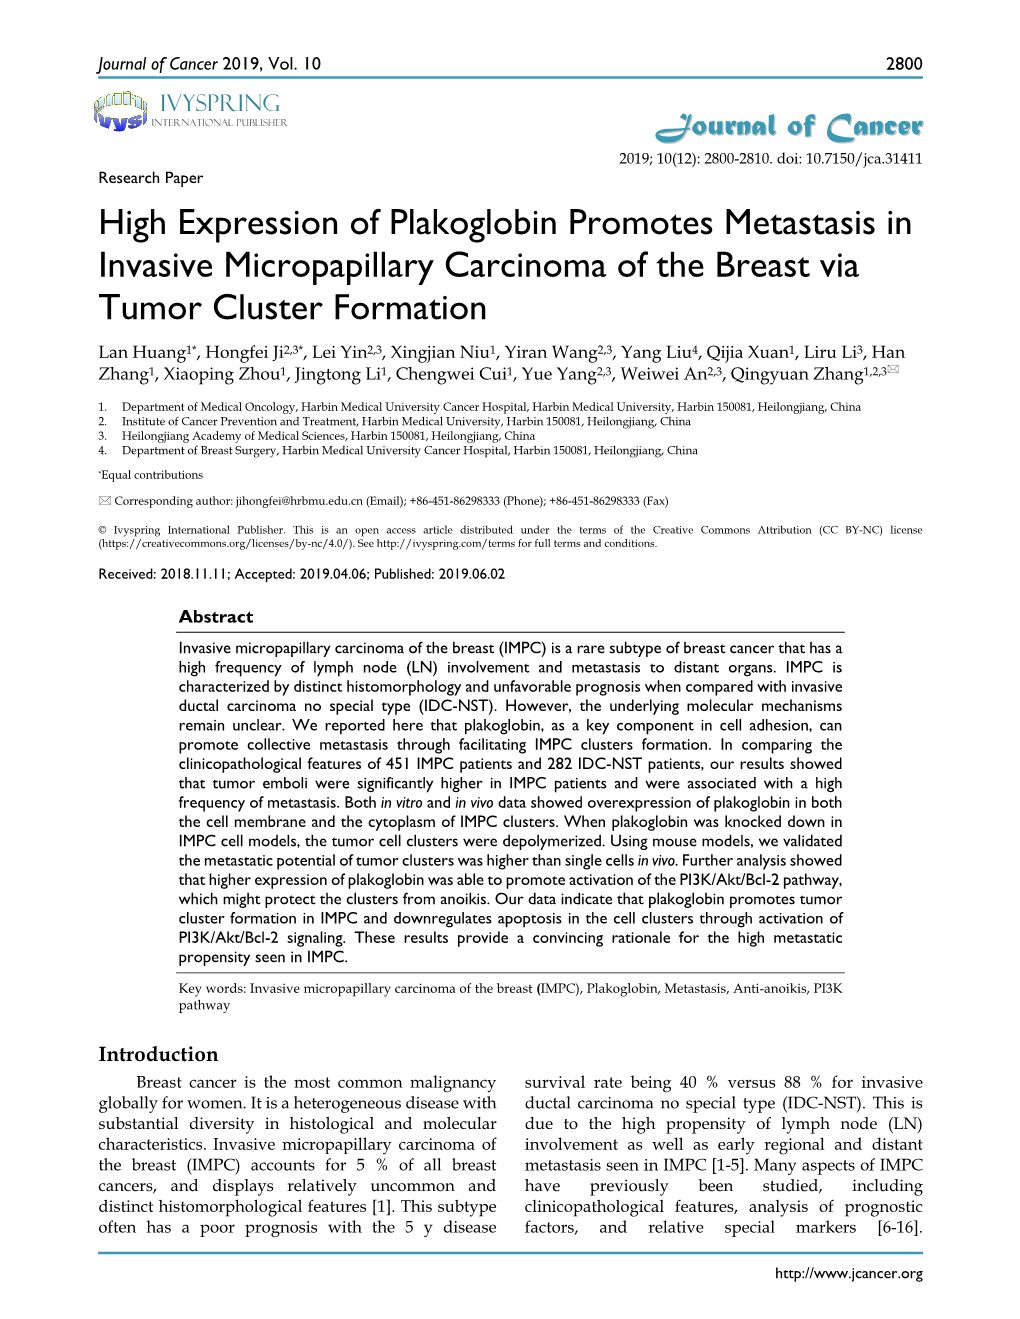 High Expression of Plakoglobin Promotes Metastasis in Invasive